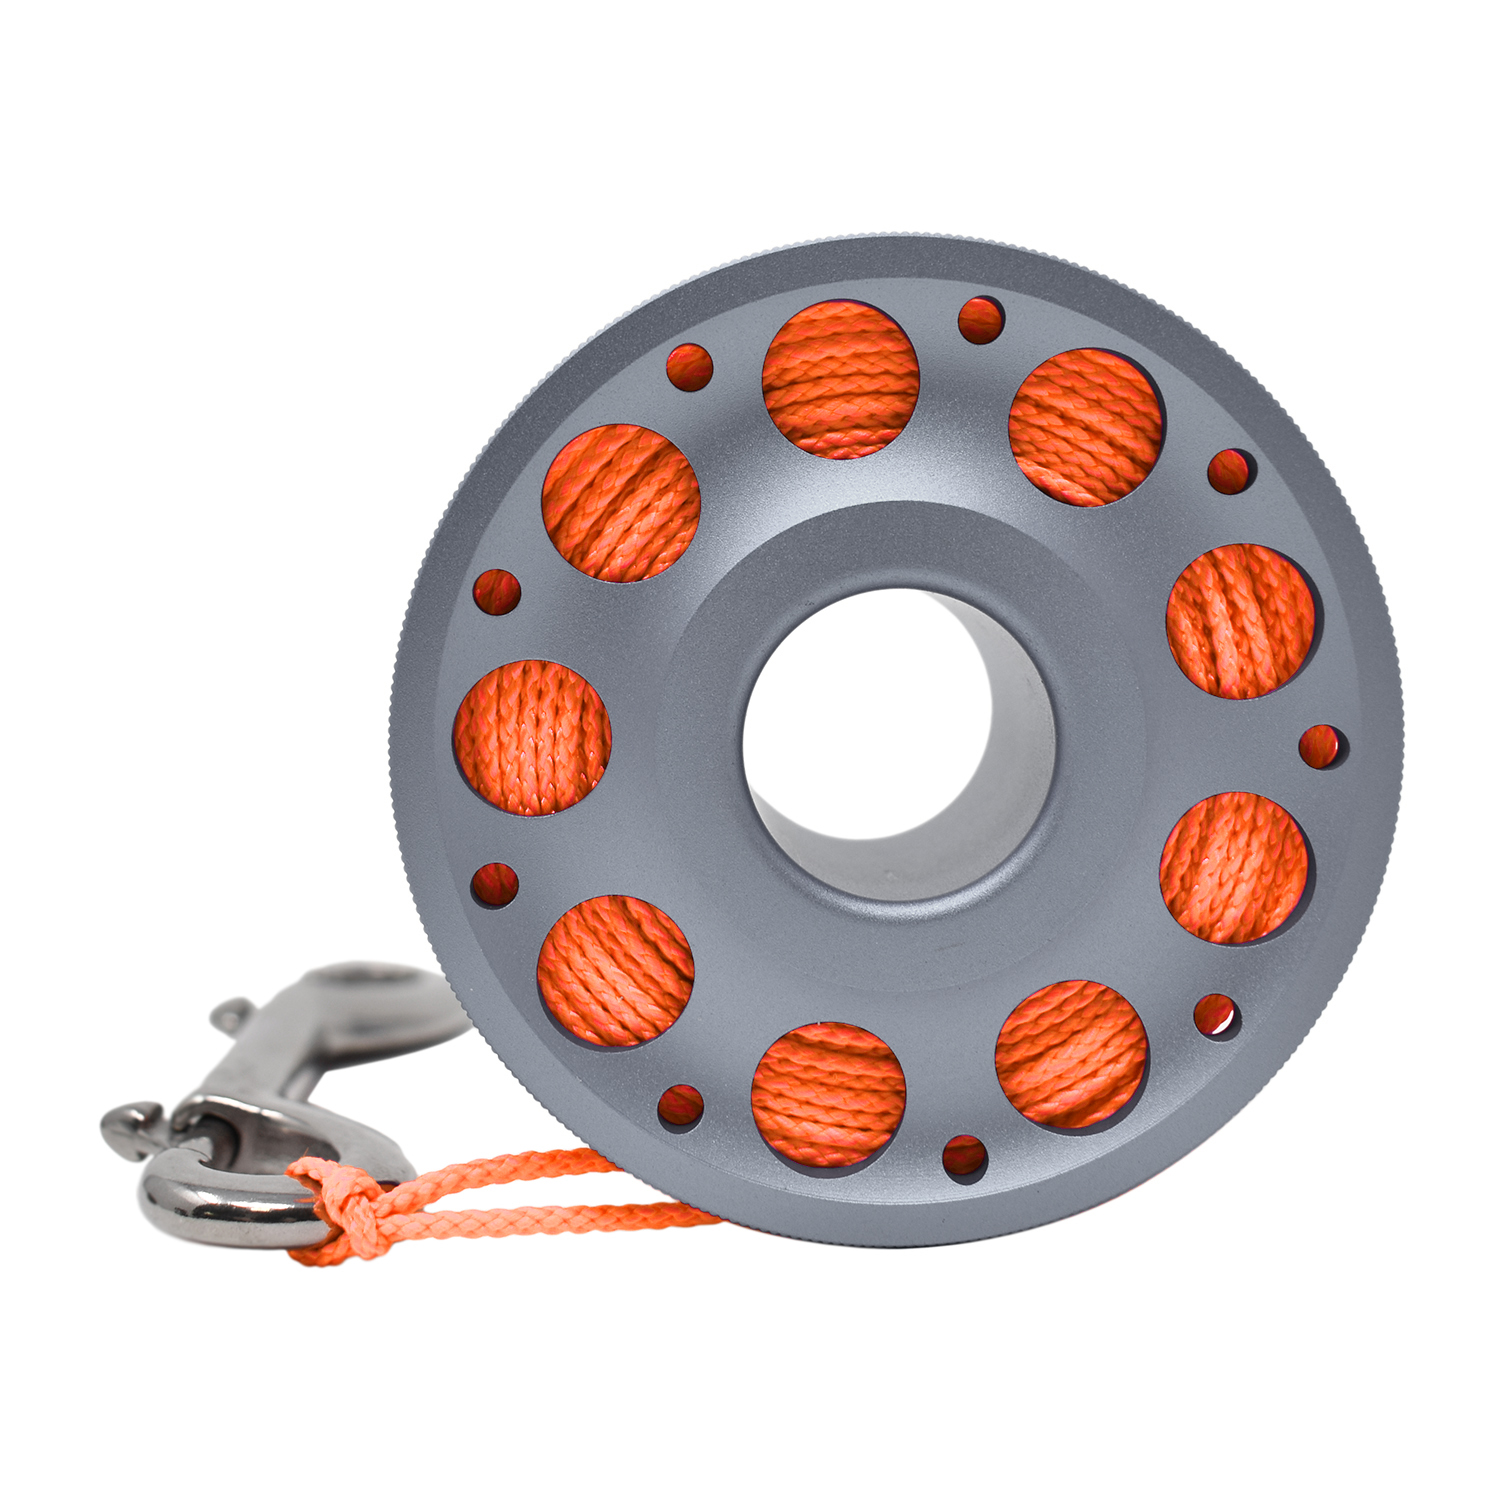 Aluminum Finger Spool 100ft Dive Reel w/ Retractable Holder, Gray/Orange - image 3 of 4